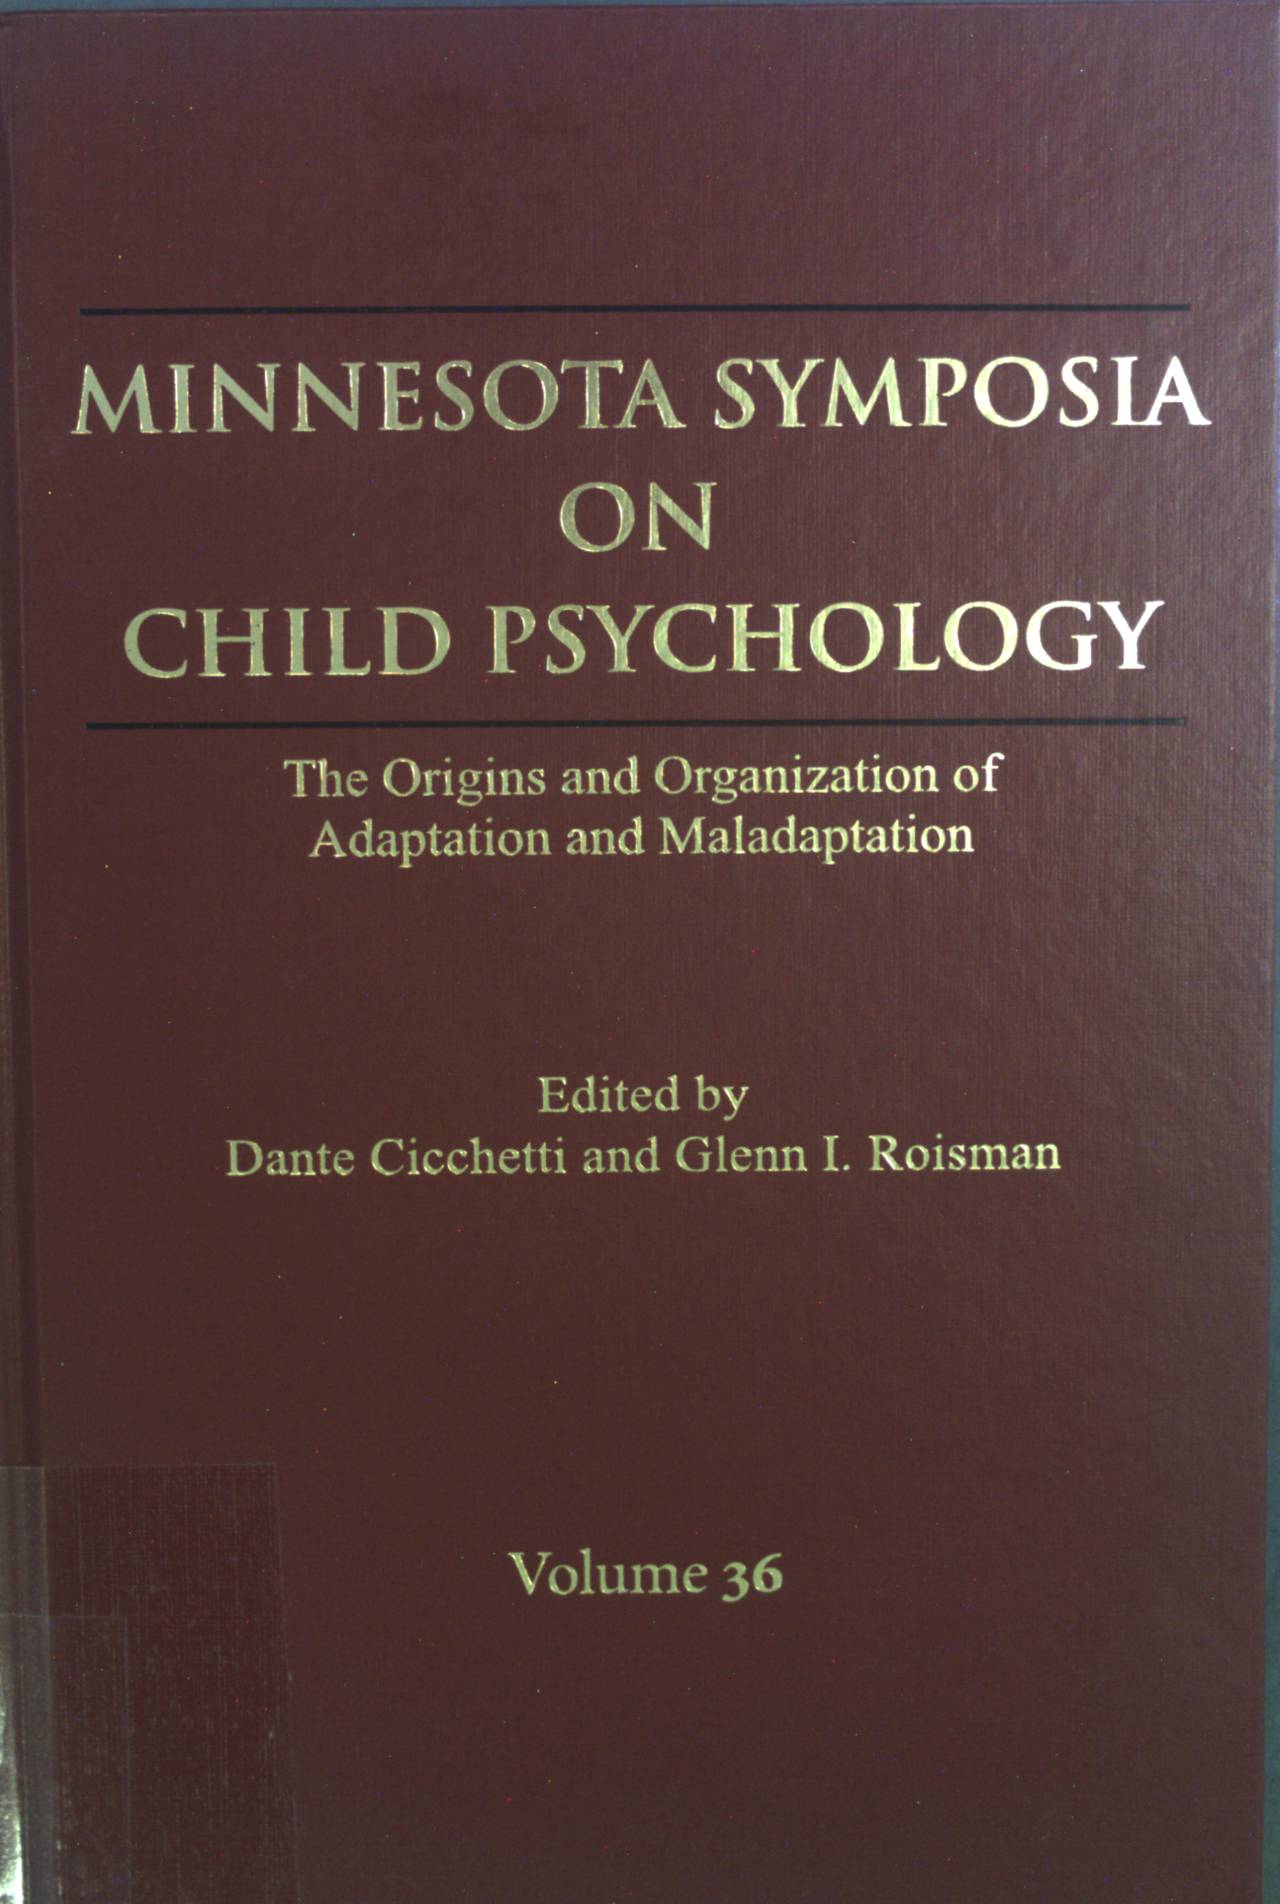 The Origins and Organization of Adaptation and Maladaptation. Minnesota Symposia on Child Psychology, vol. 36 - Cicchetti, Dante and Glenn I. Roisman